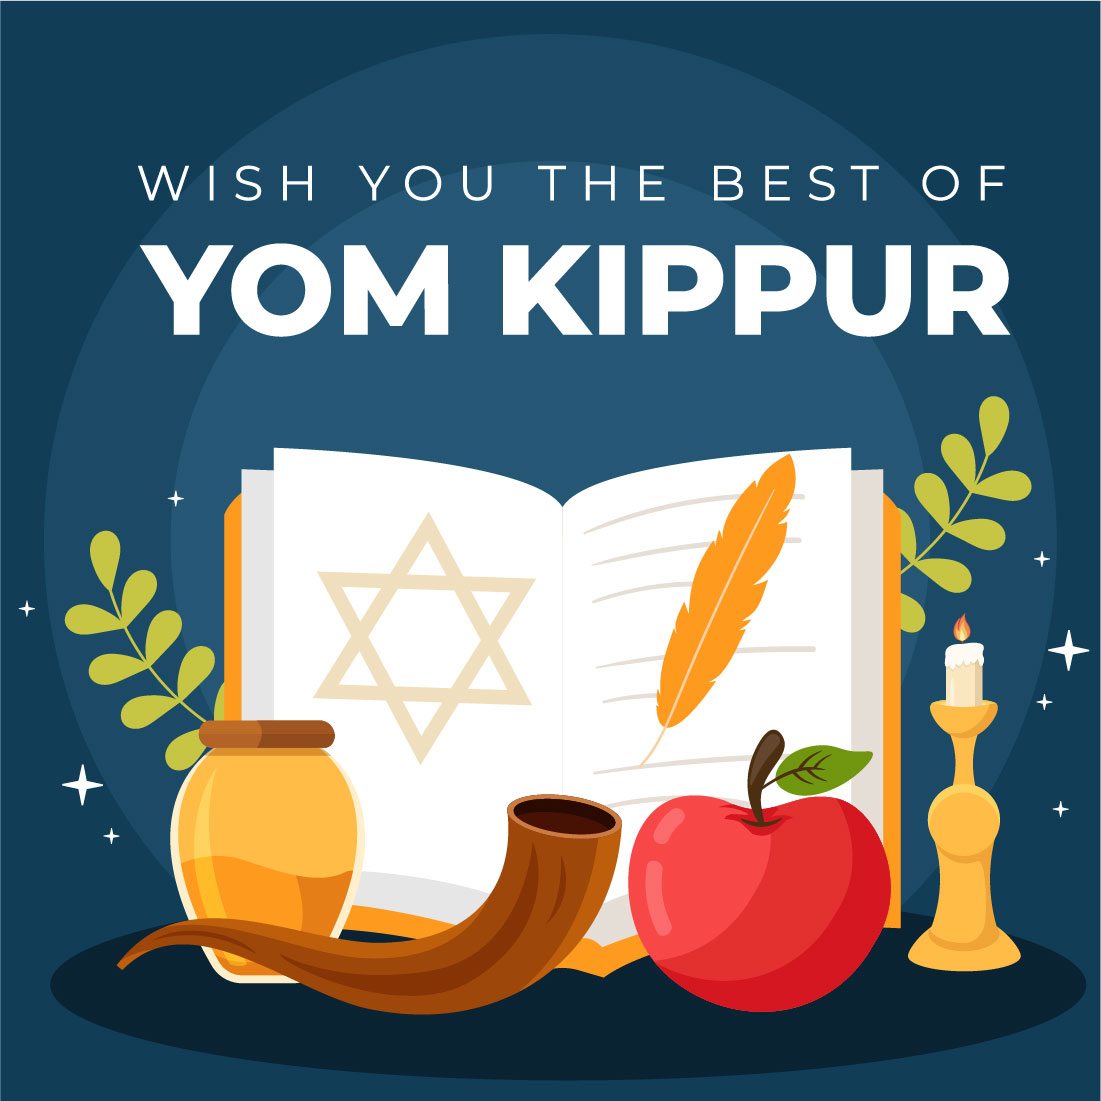 13 Yom Kippur Day Celebration Illustration Cover Image.